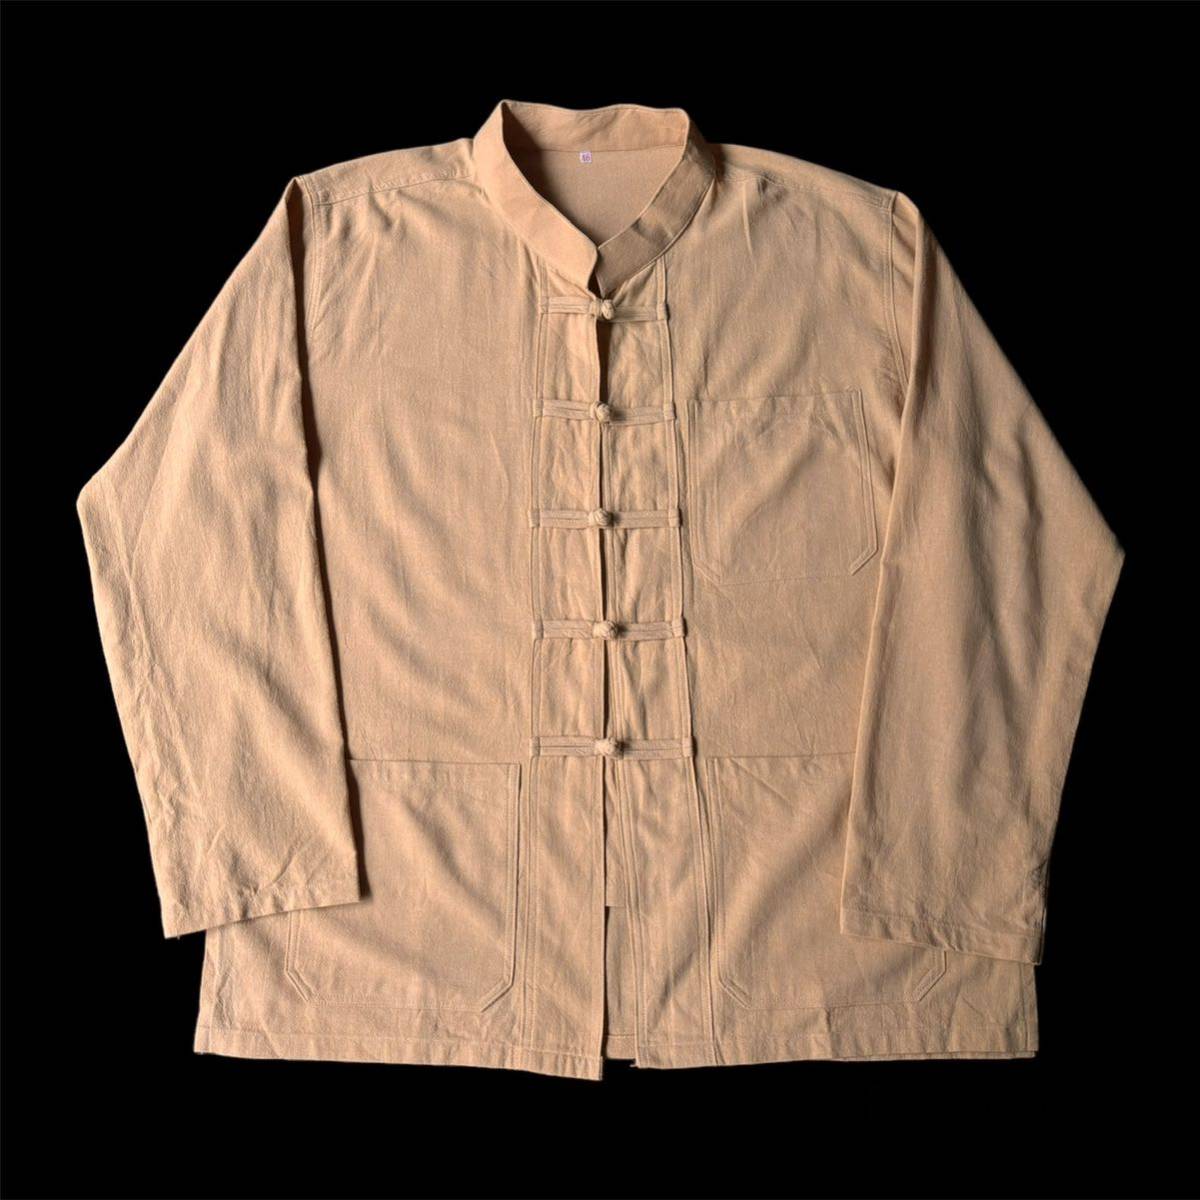 80s 〜90s Unkown Cotton Rayon? French China Work Jacket 46サイズ 80年代 90年代 コットン レーヨン? フレンチチャイナワークジャケットの画像1